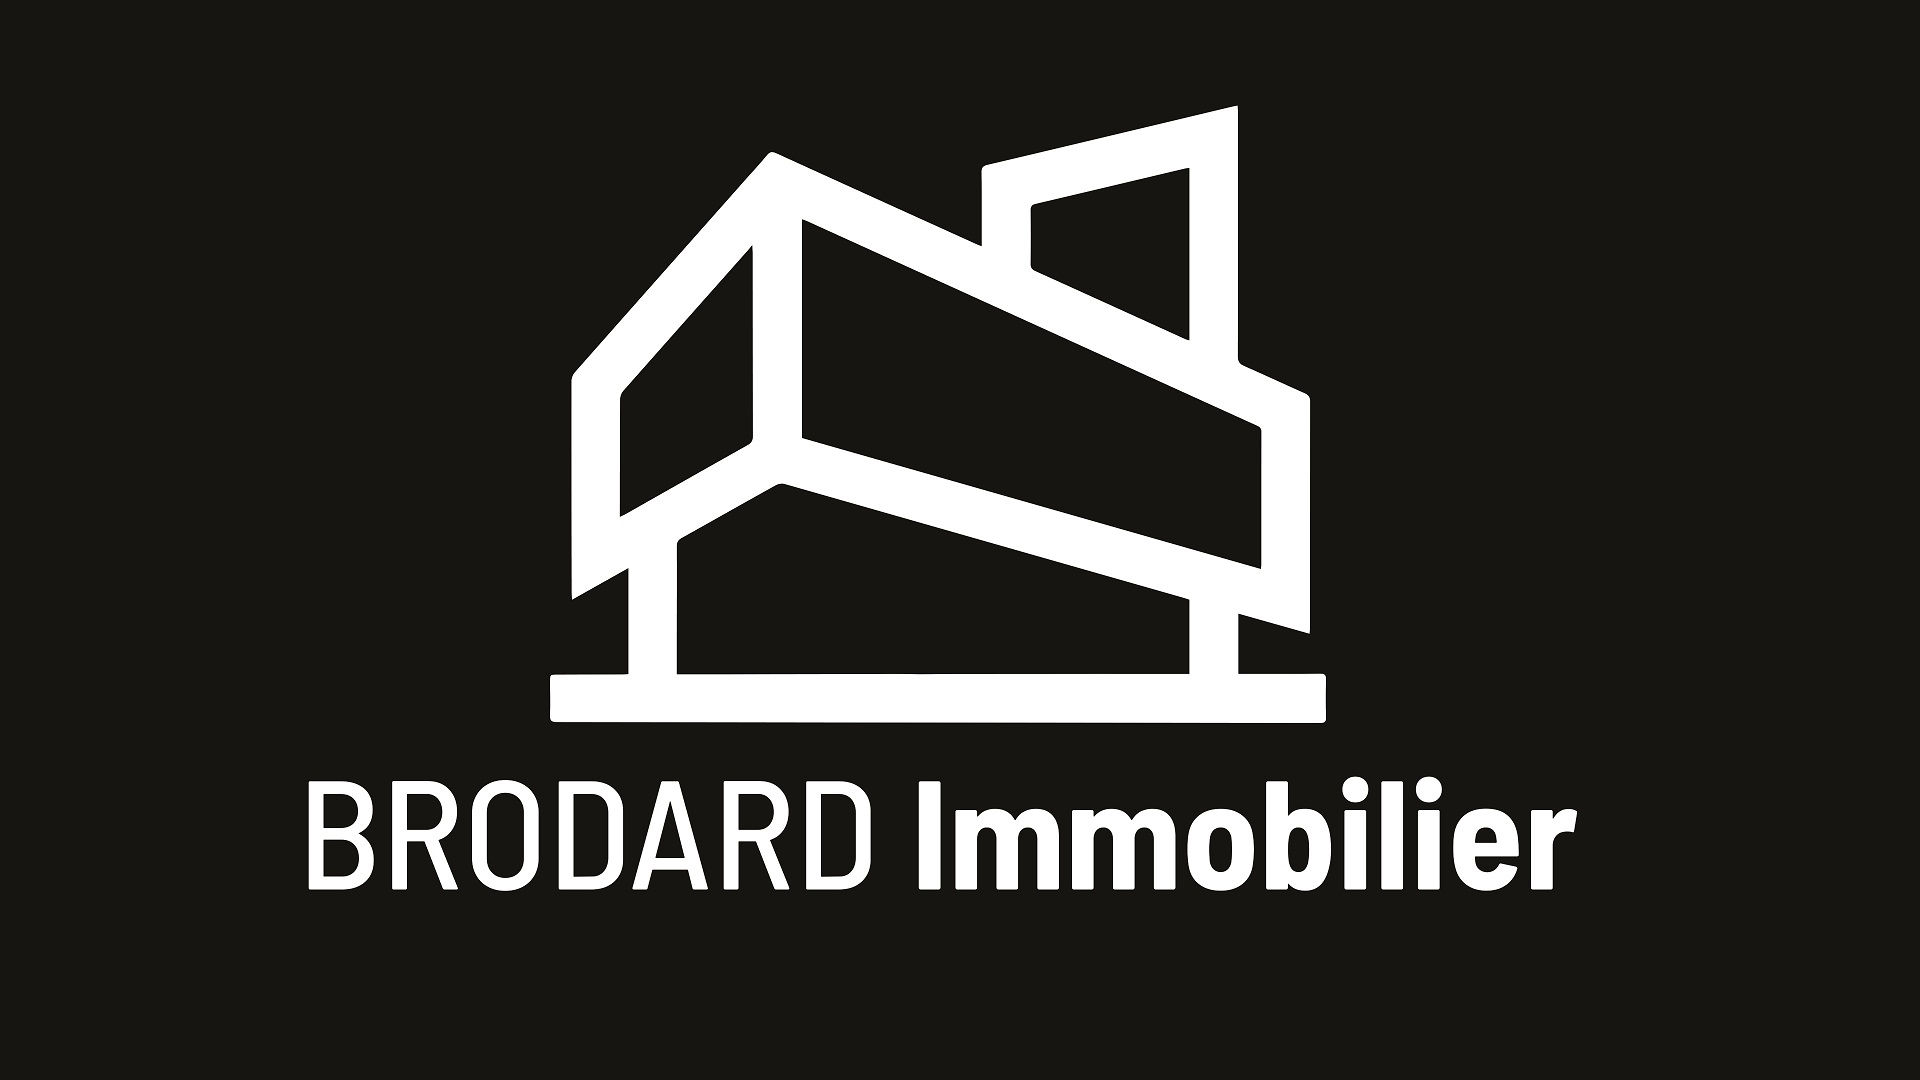 BRODARD Immobilier